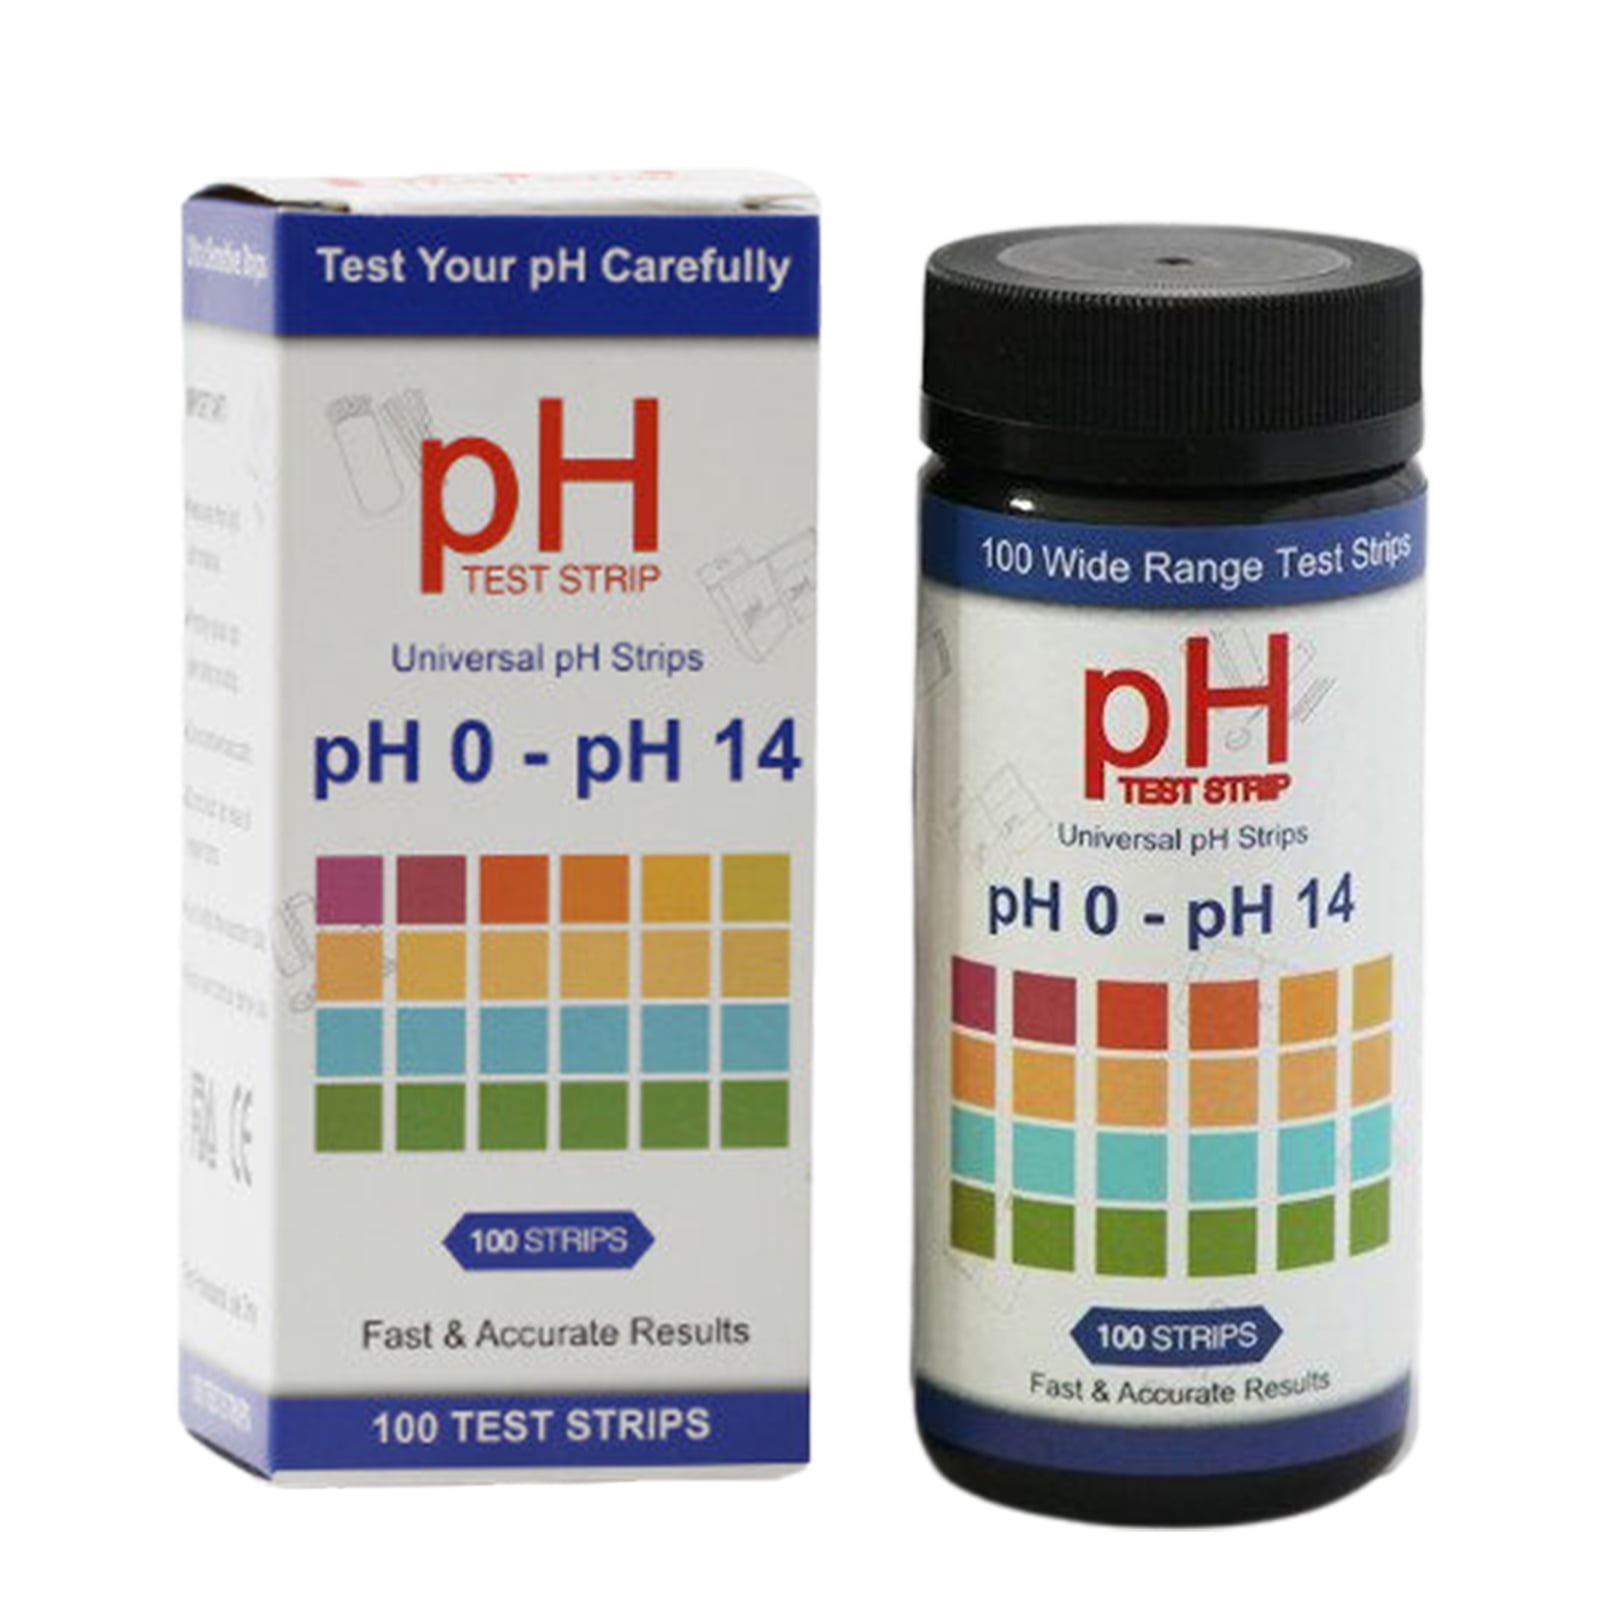 2 TestSure pH Test Strips Box for Water pH Range 0-14 Soil & More 100/box 